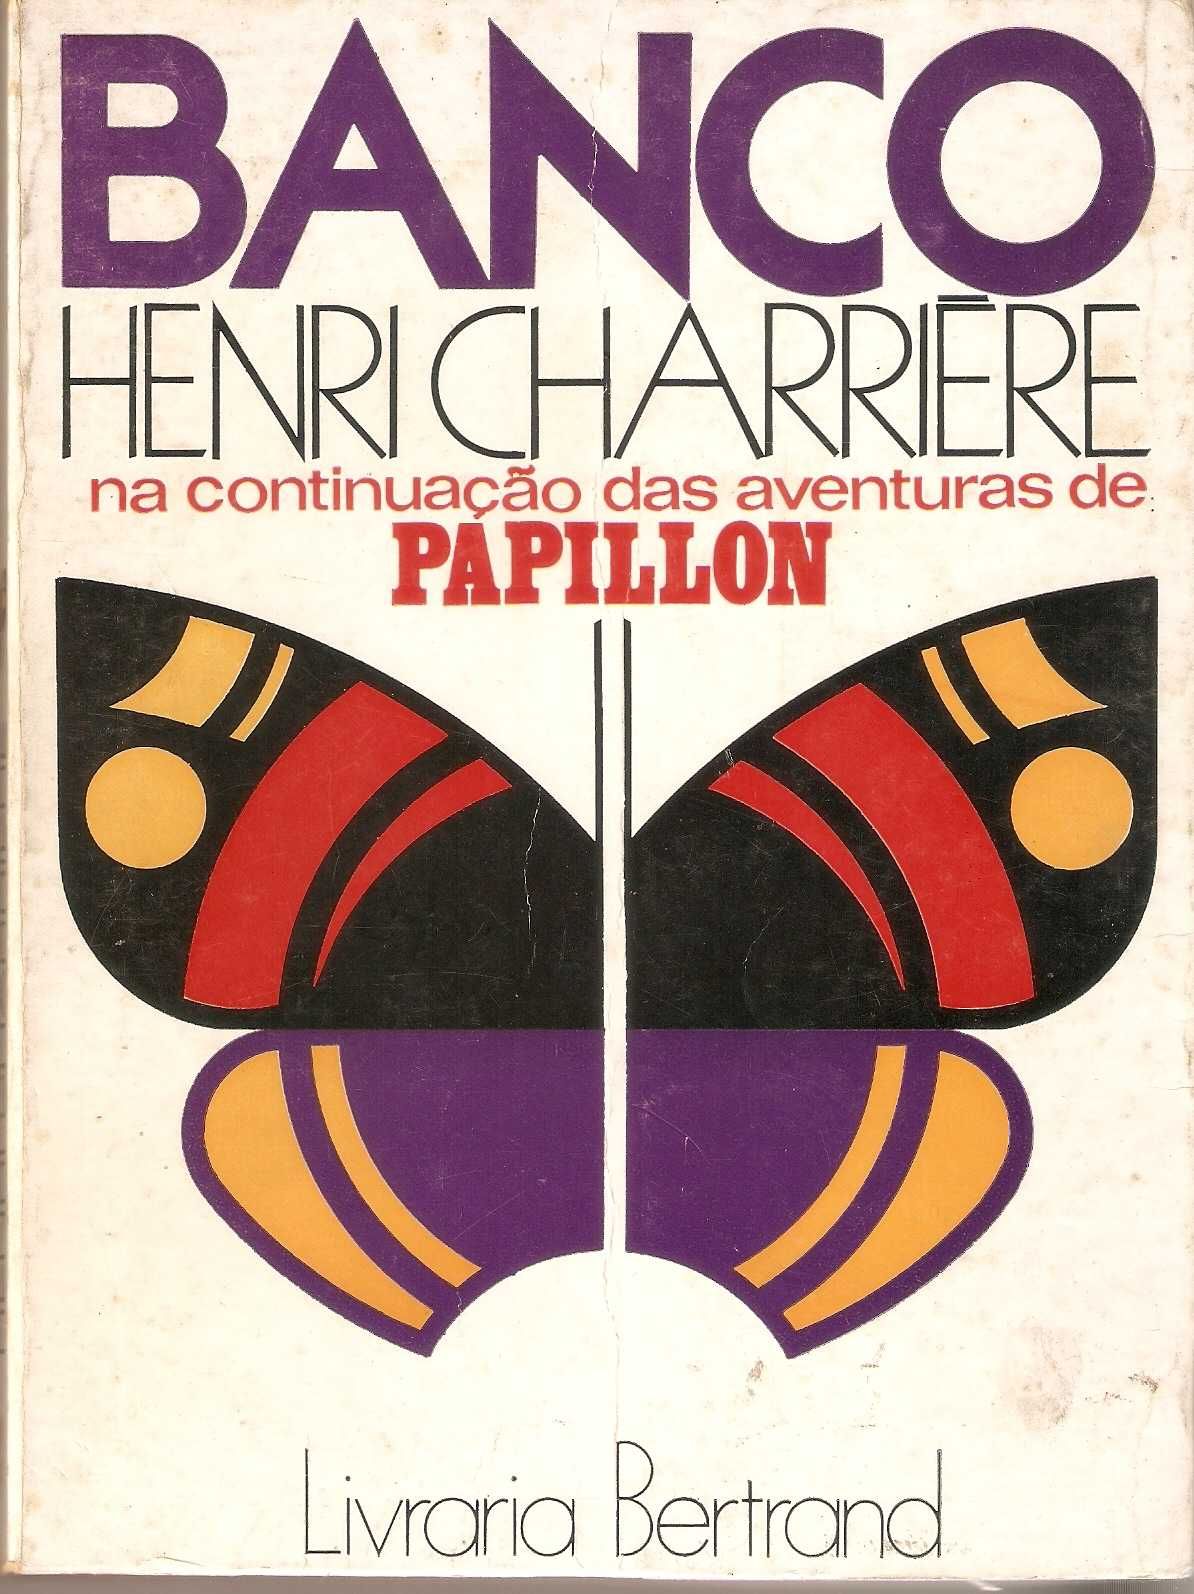 Banco livro do Autor Henri Charriére "Pappillon"